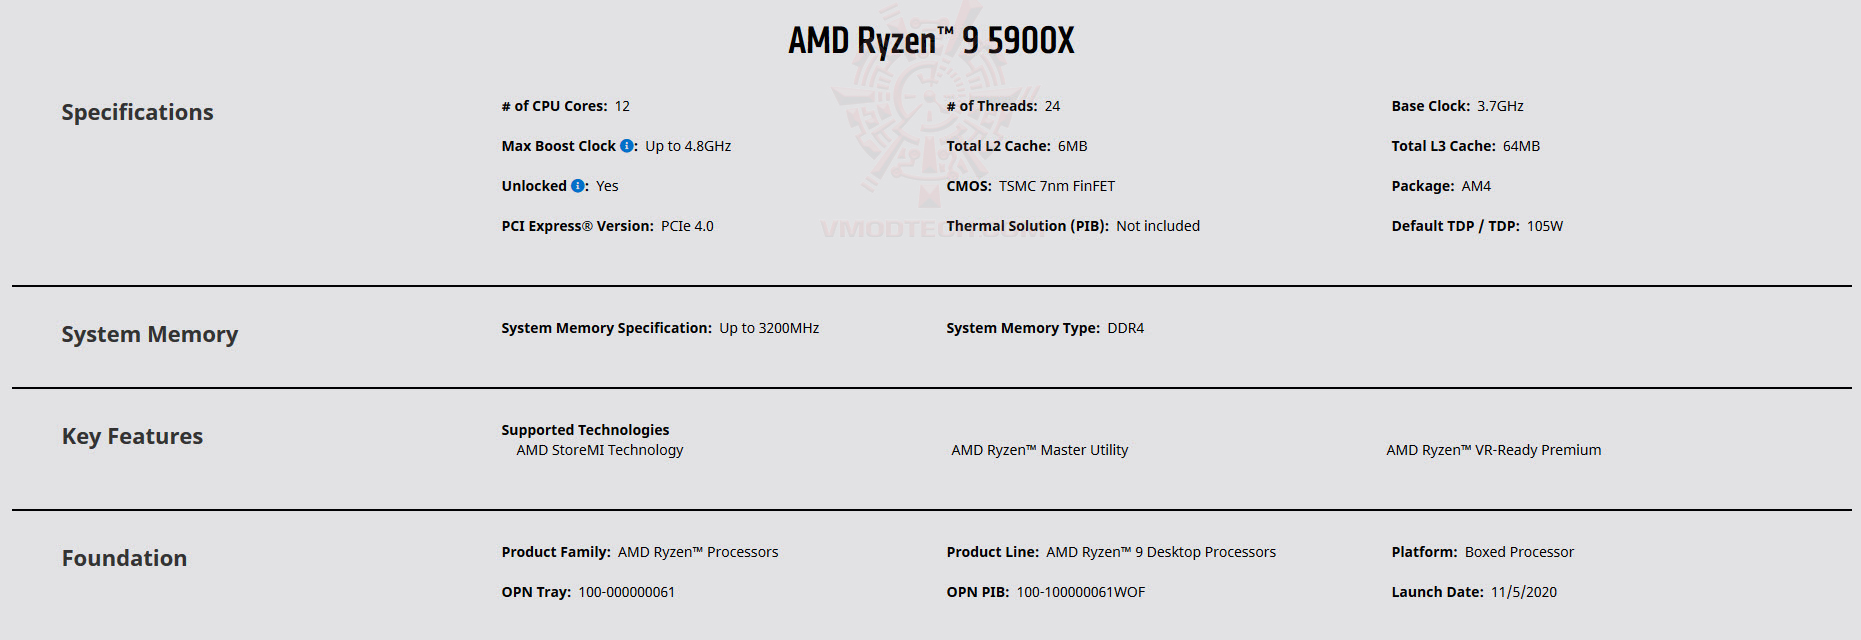 2020 11 03 22 22 48 AMD RYZEN 9 5900X PROCESSOR REVIEW